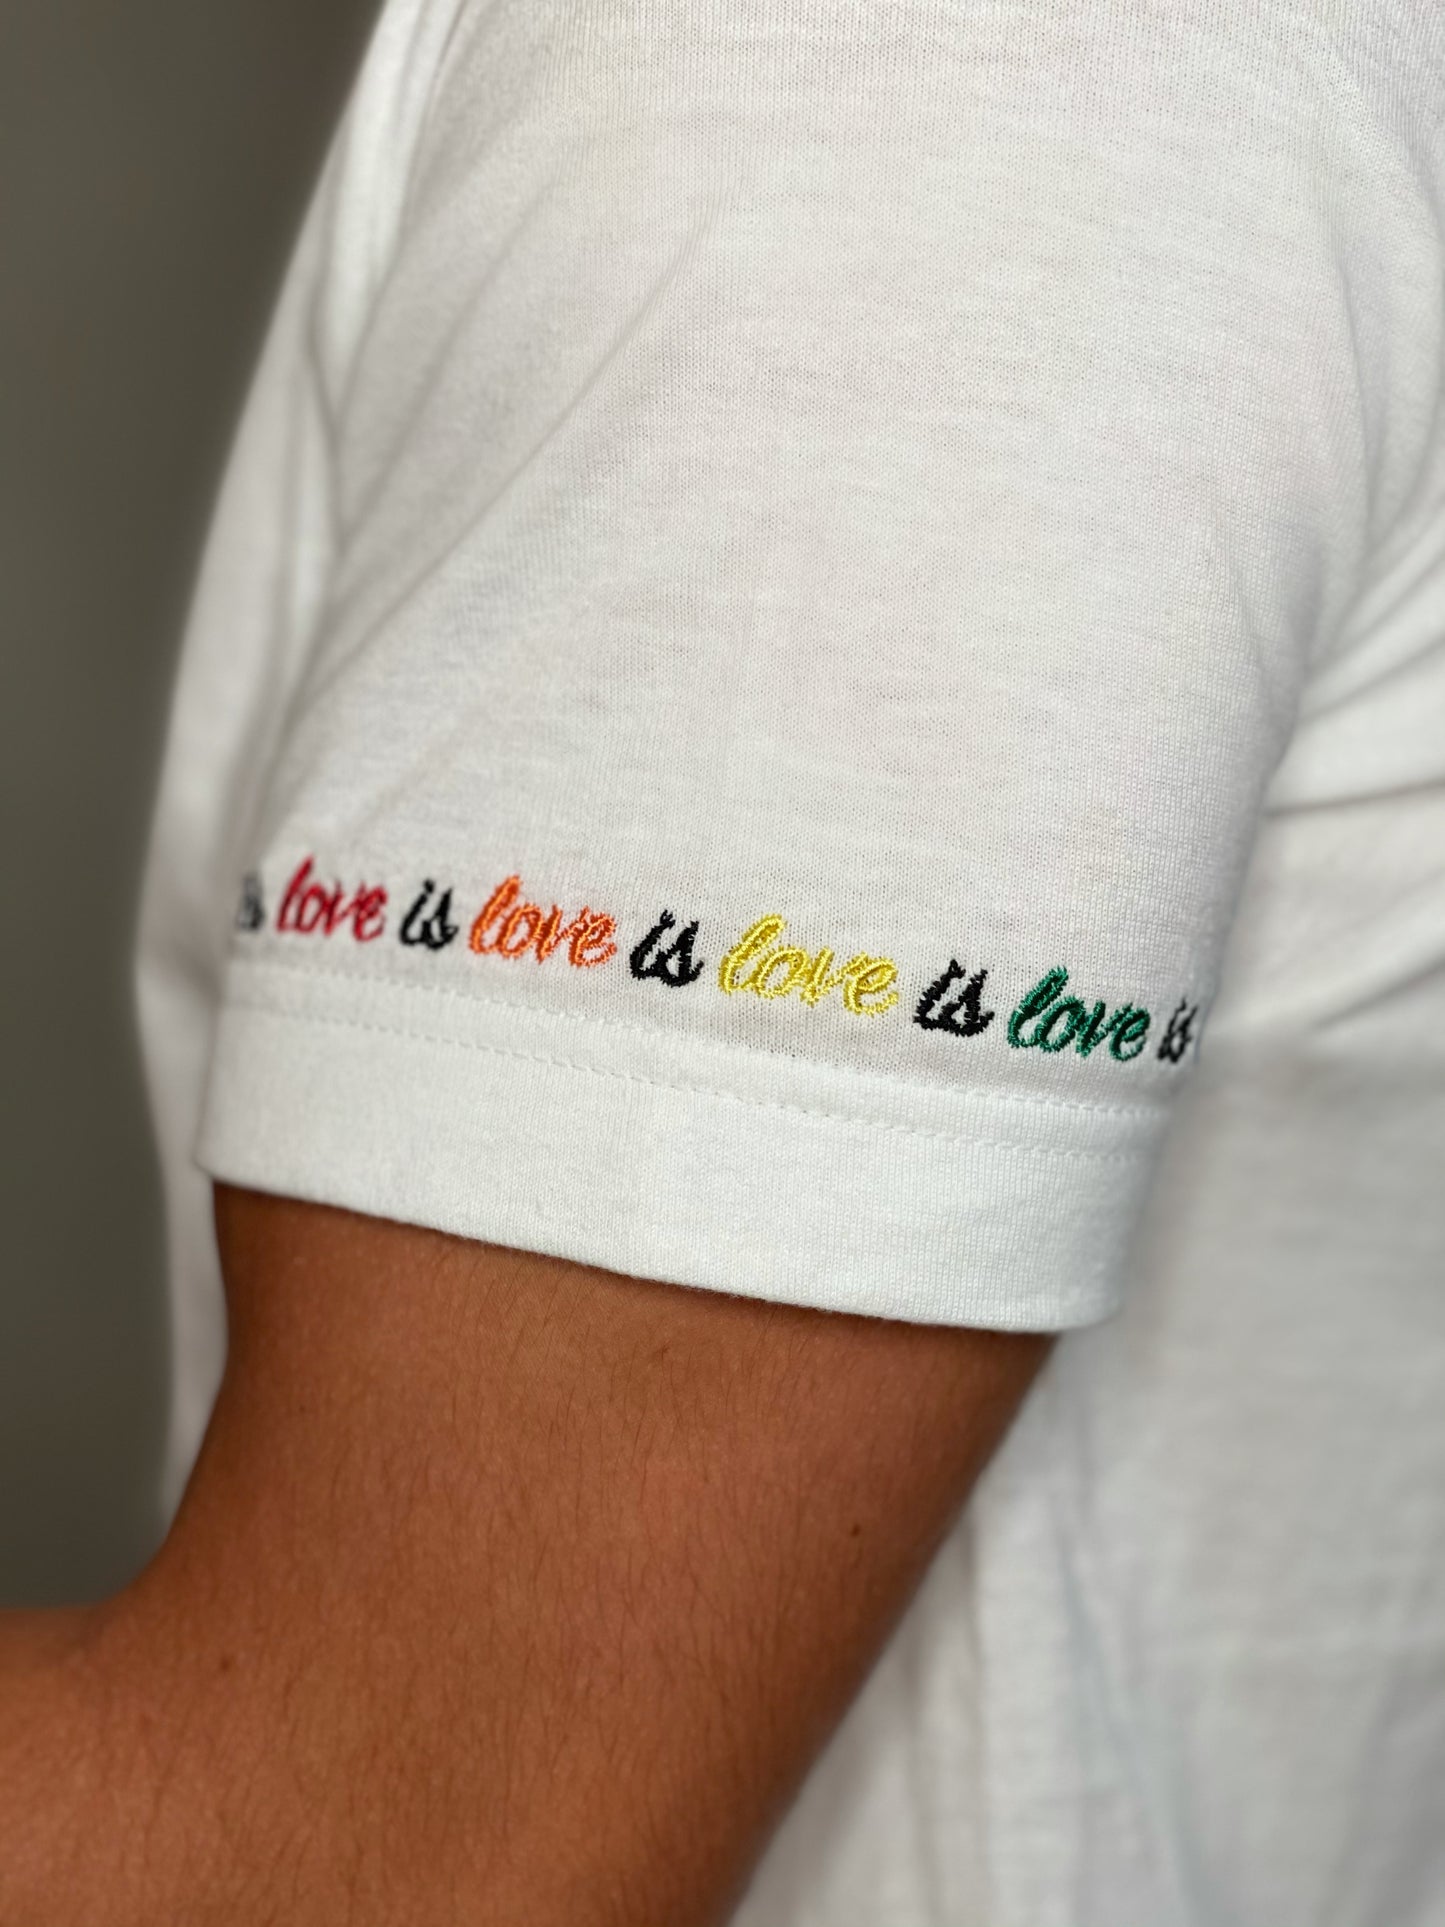 "Love is Love" t-shirt